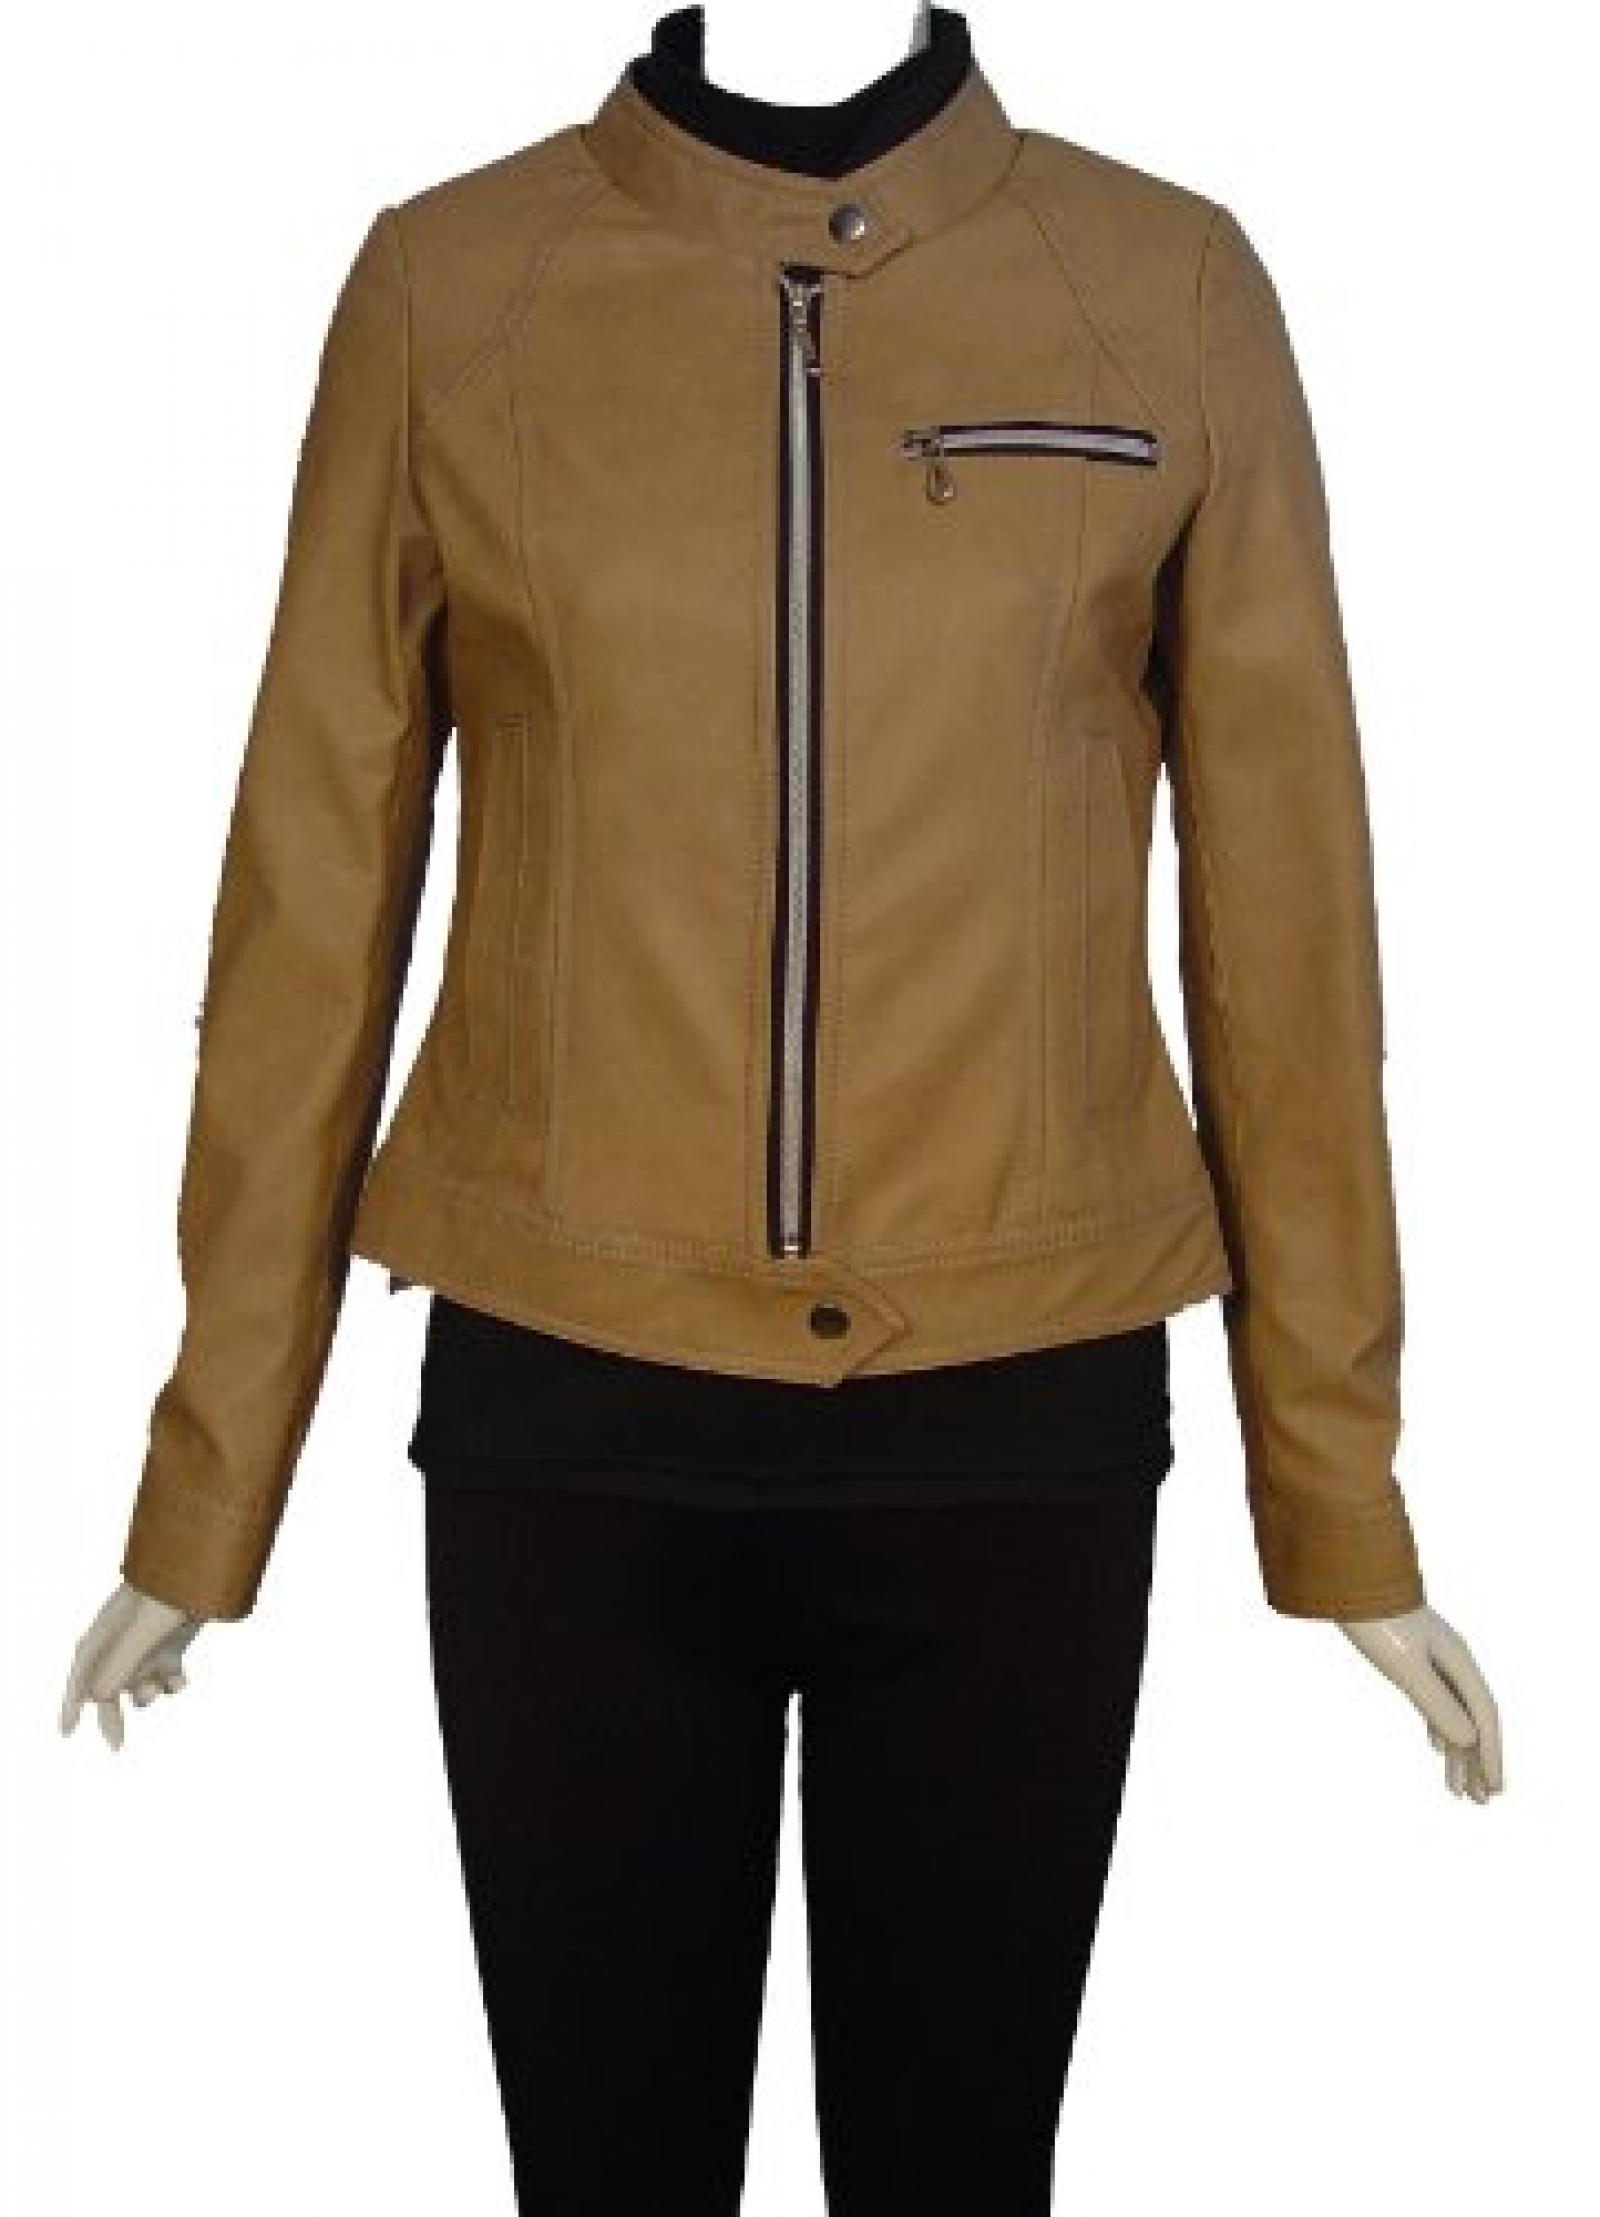 Nettailor Women PLUS SIZE 4063 Lamb Leather Motorcycle Jacket 